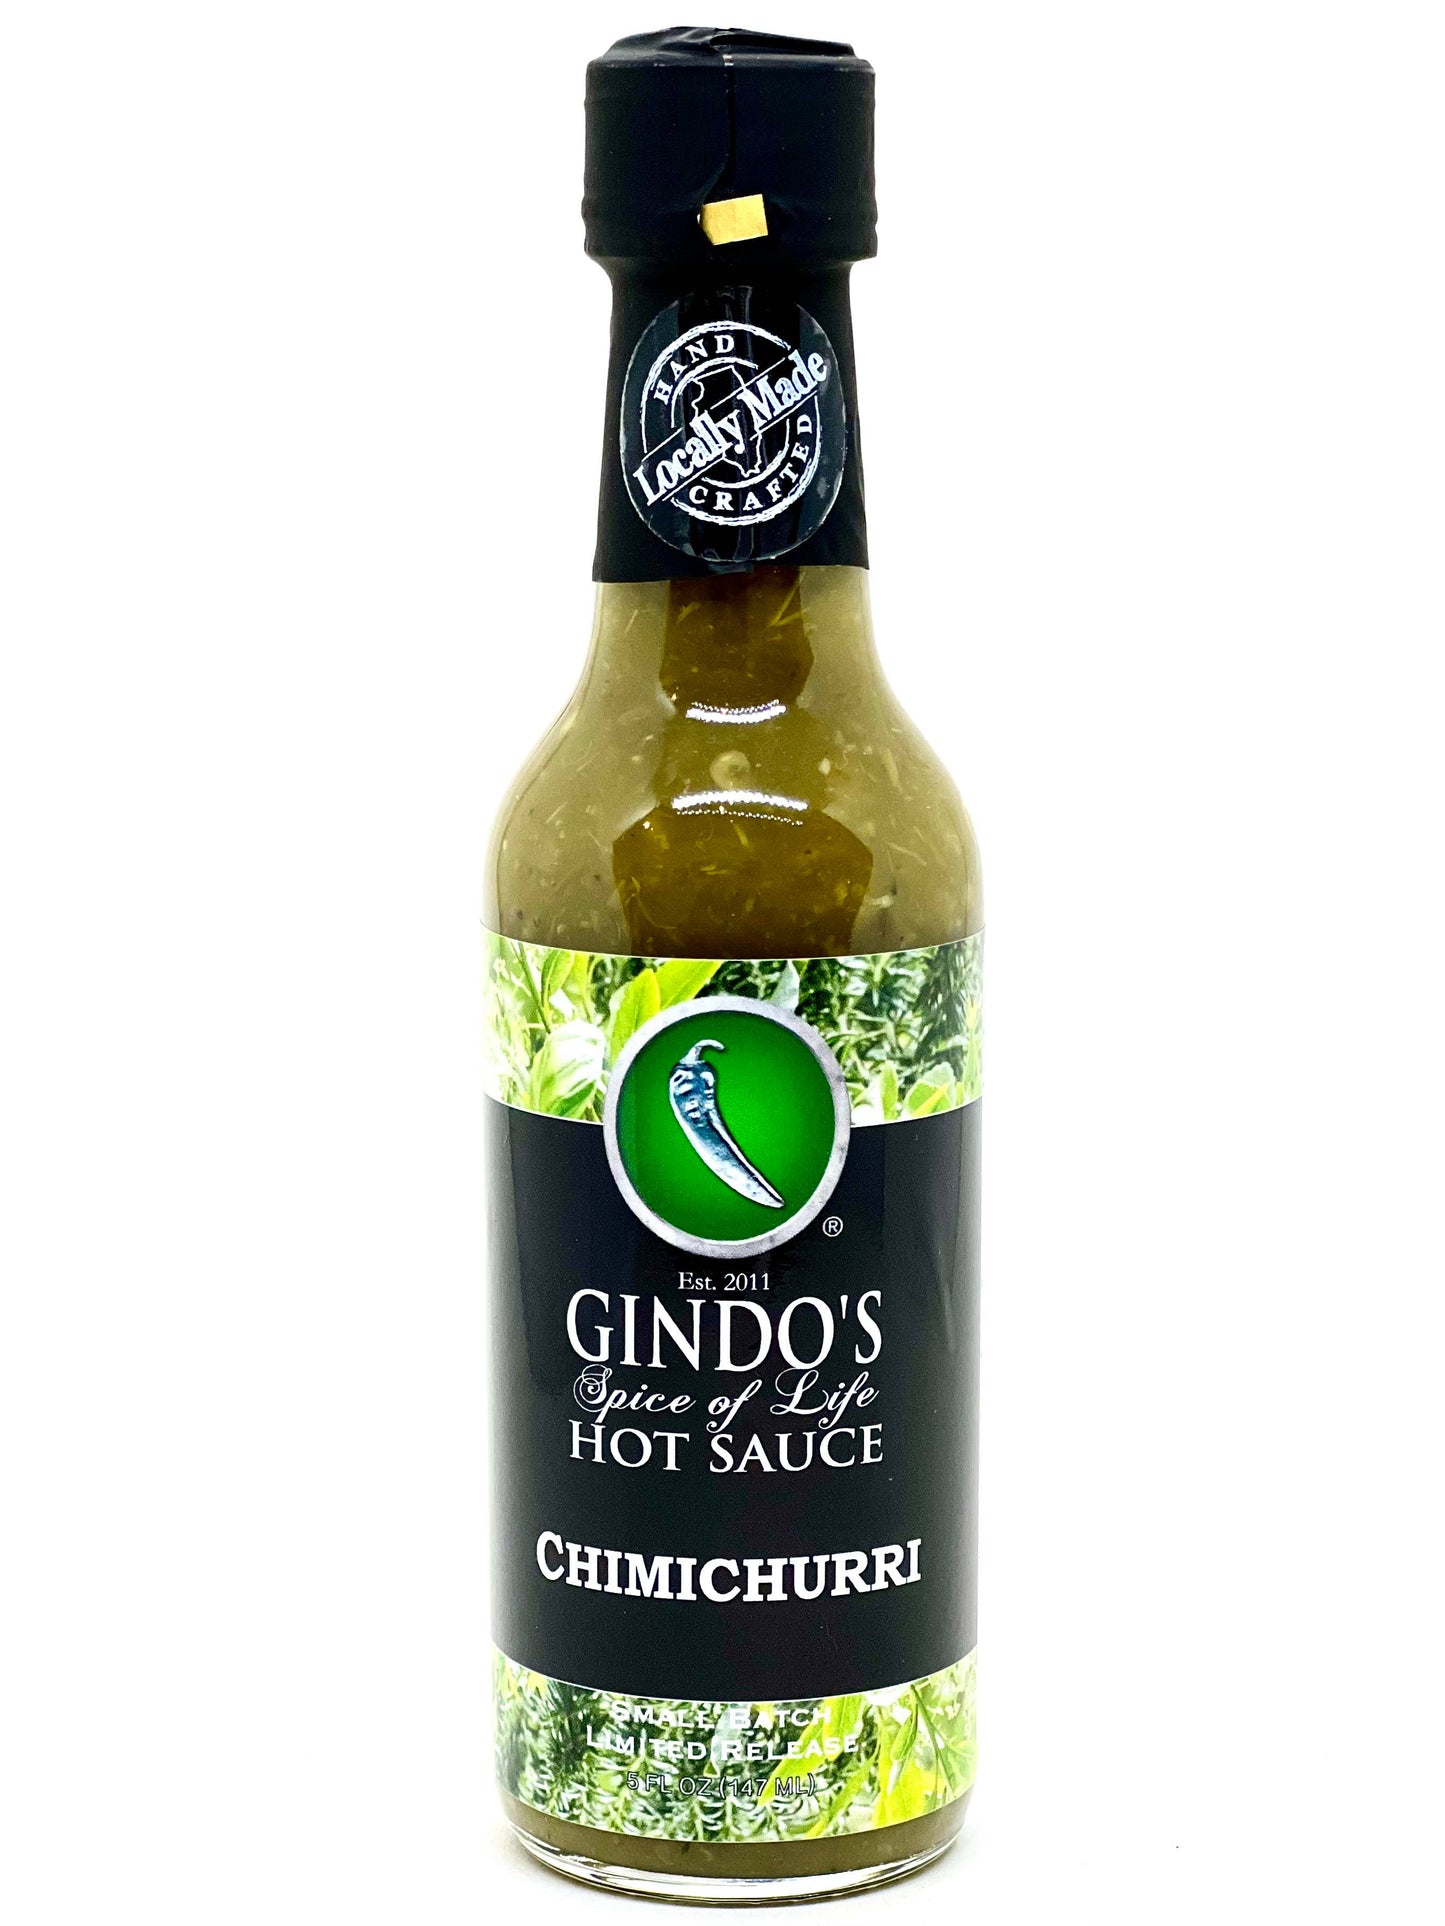 Gindo's Spice of Life - Chimichurri Hot Sauce 5oz